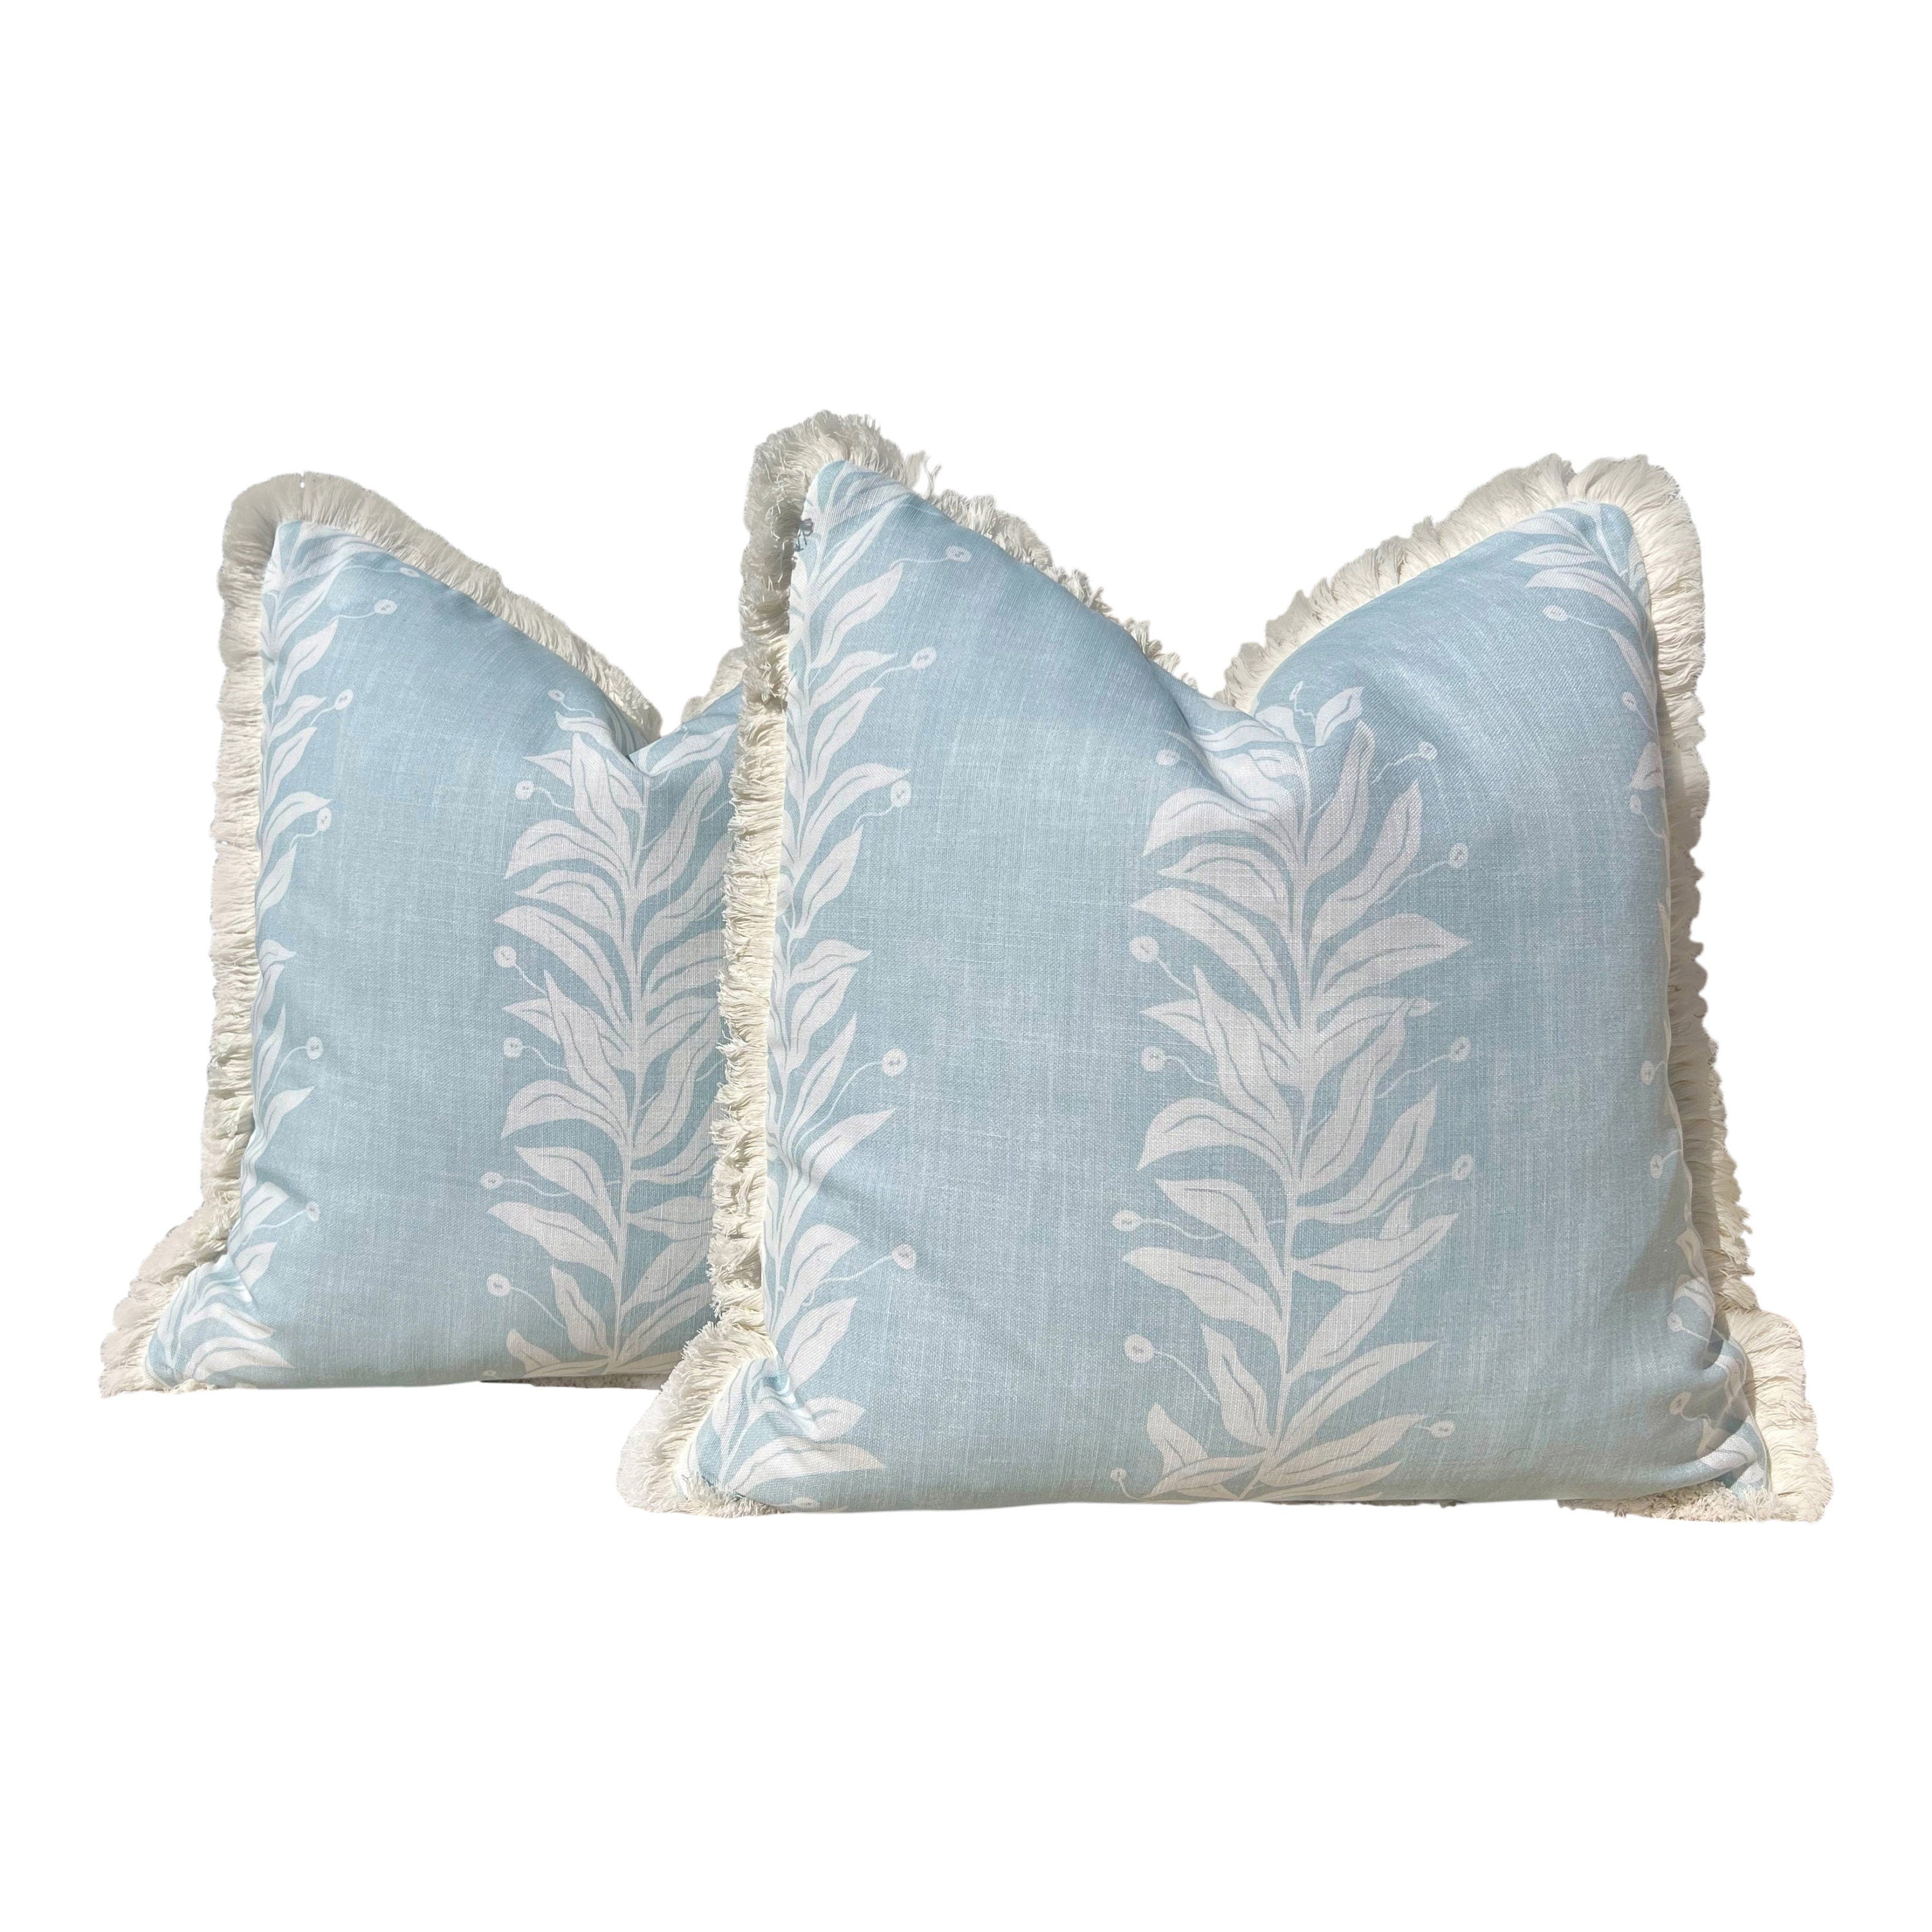 Schumacher Tendril Stripe Outdoor Decorative Pillow in Sky Blue. Designer Pillow Covers, Accent LIght Blue Cushion Cover, Outdoor Deck Decor